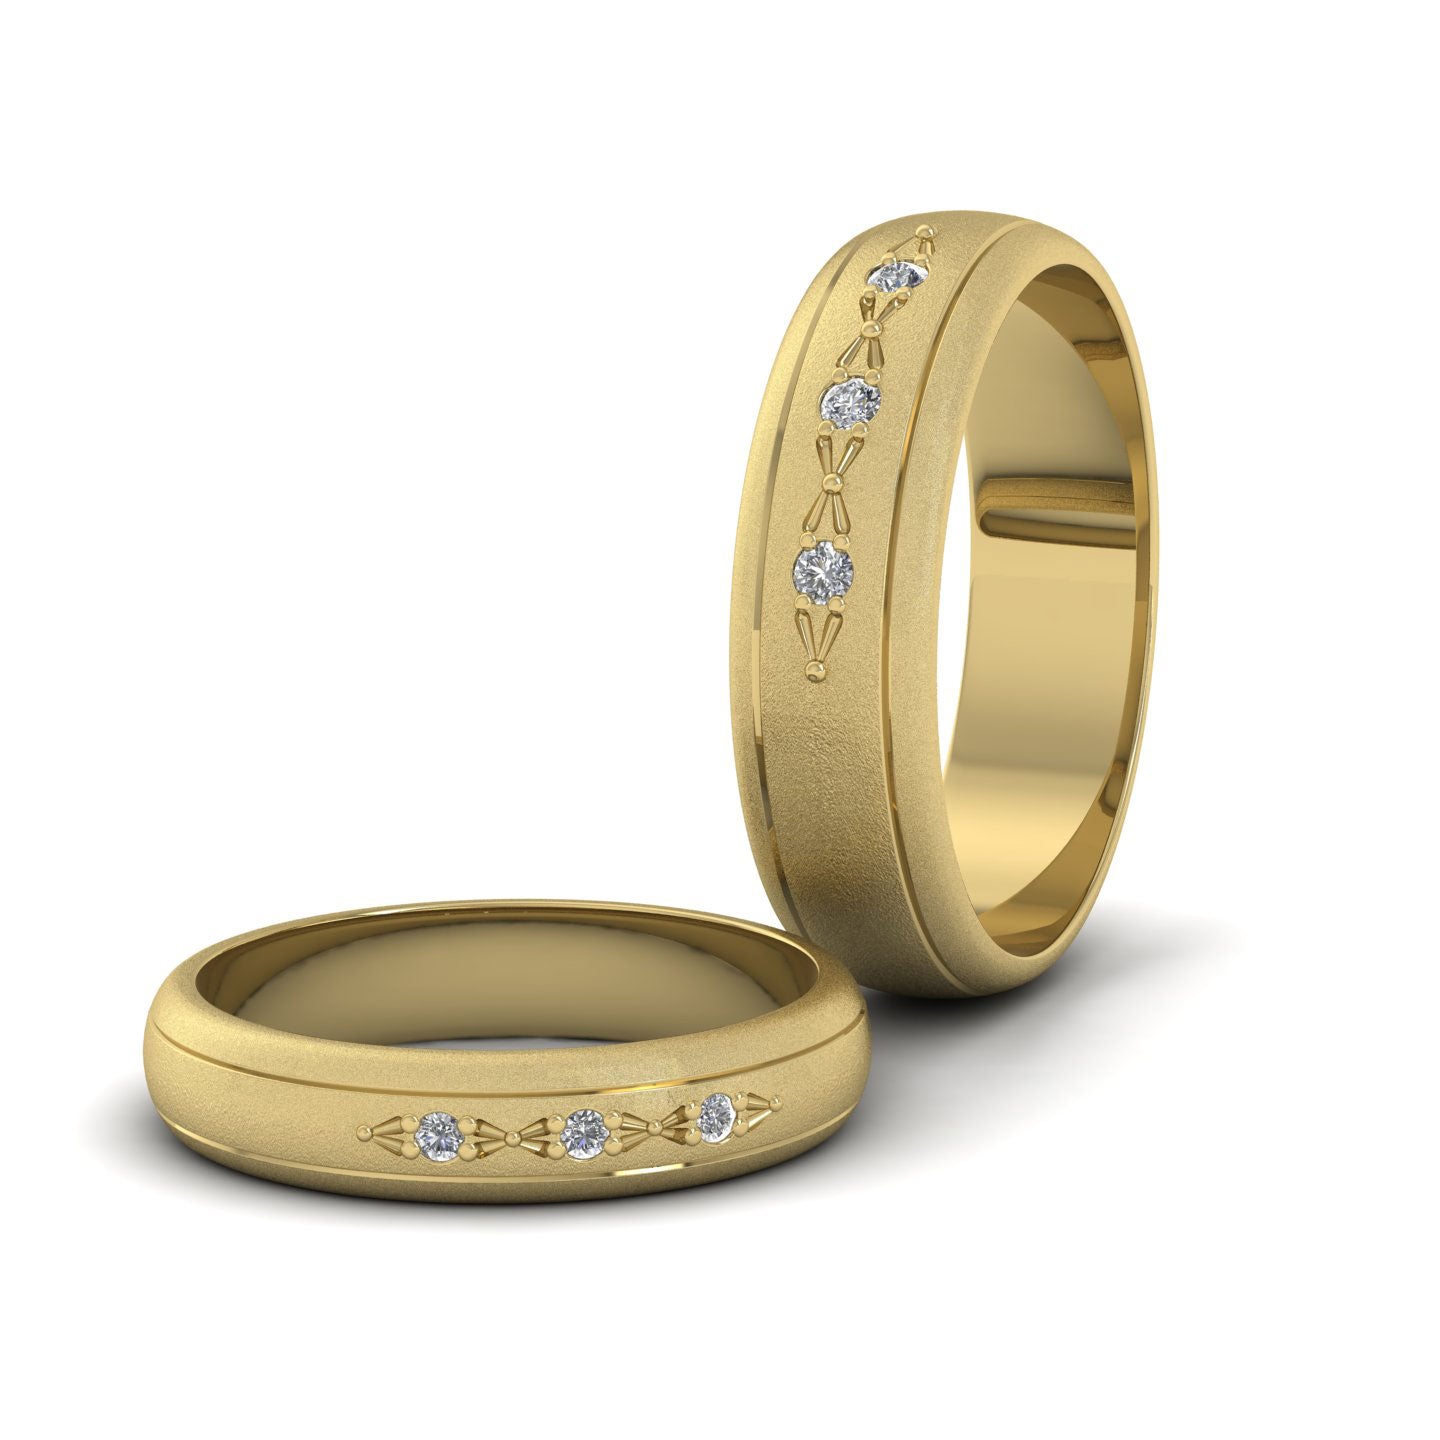 Three Diamond Set 9ct Yellow Gold 6mm Wedding Ring With Lines